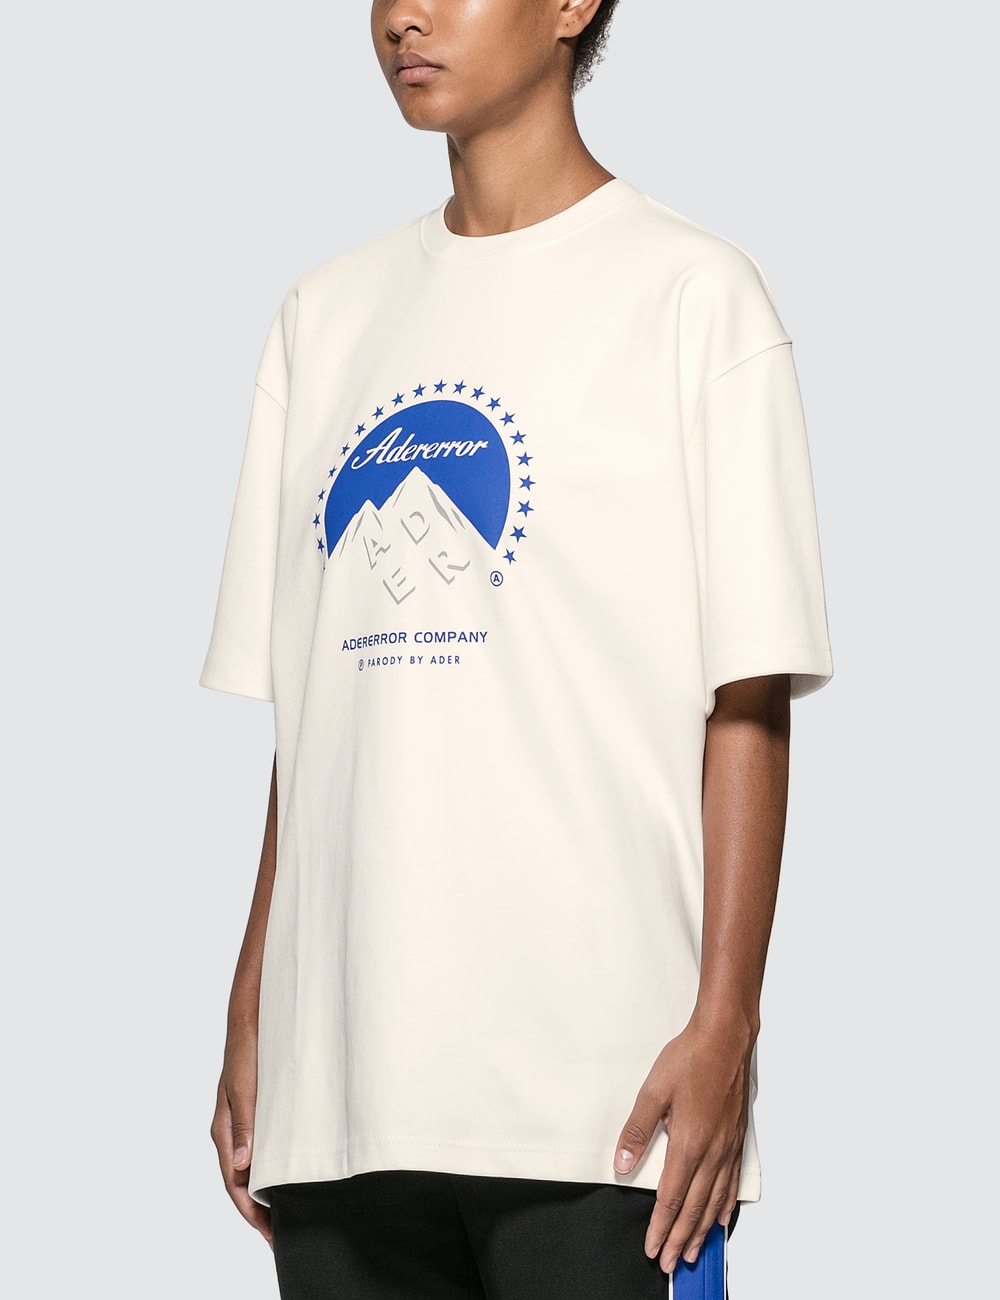 Ader Error - Adererror Company Oversized T-Shirt | HBX